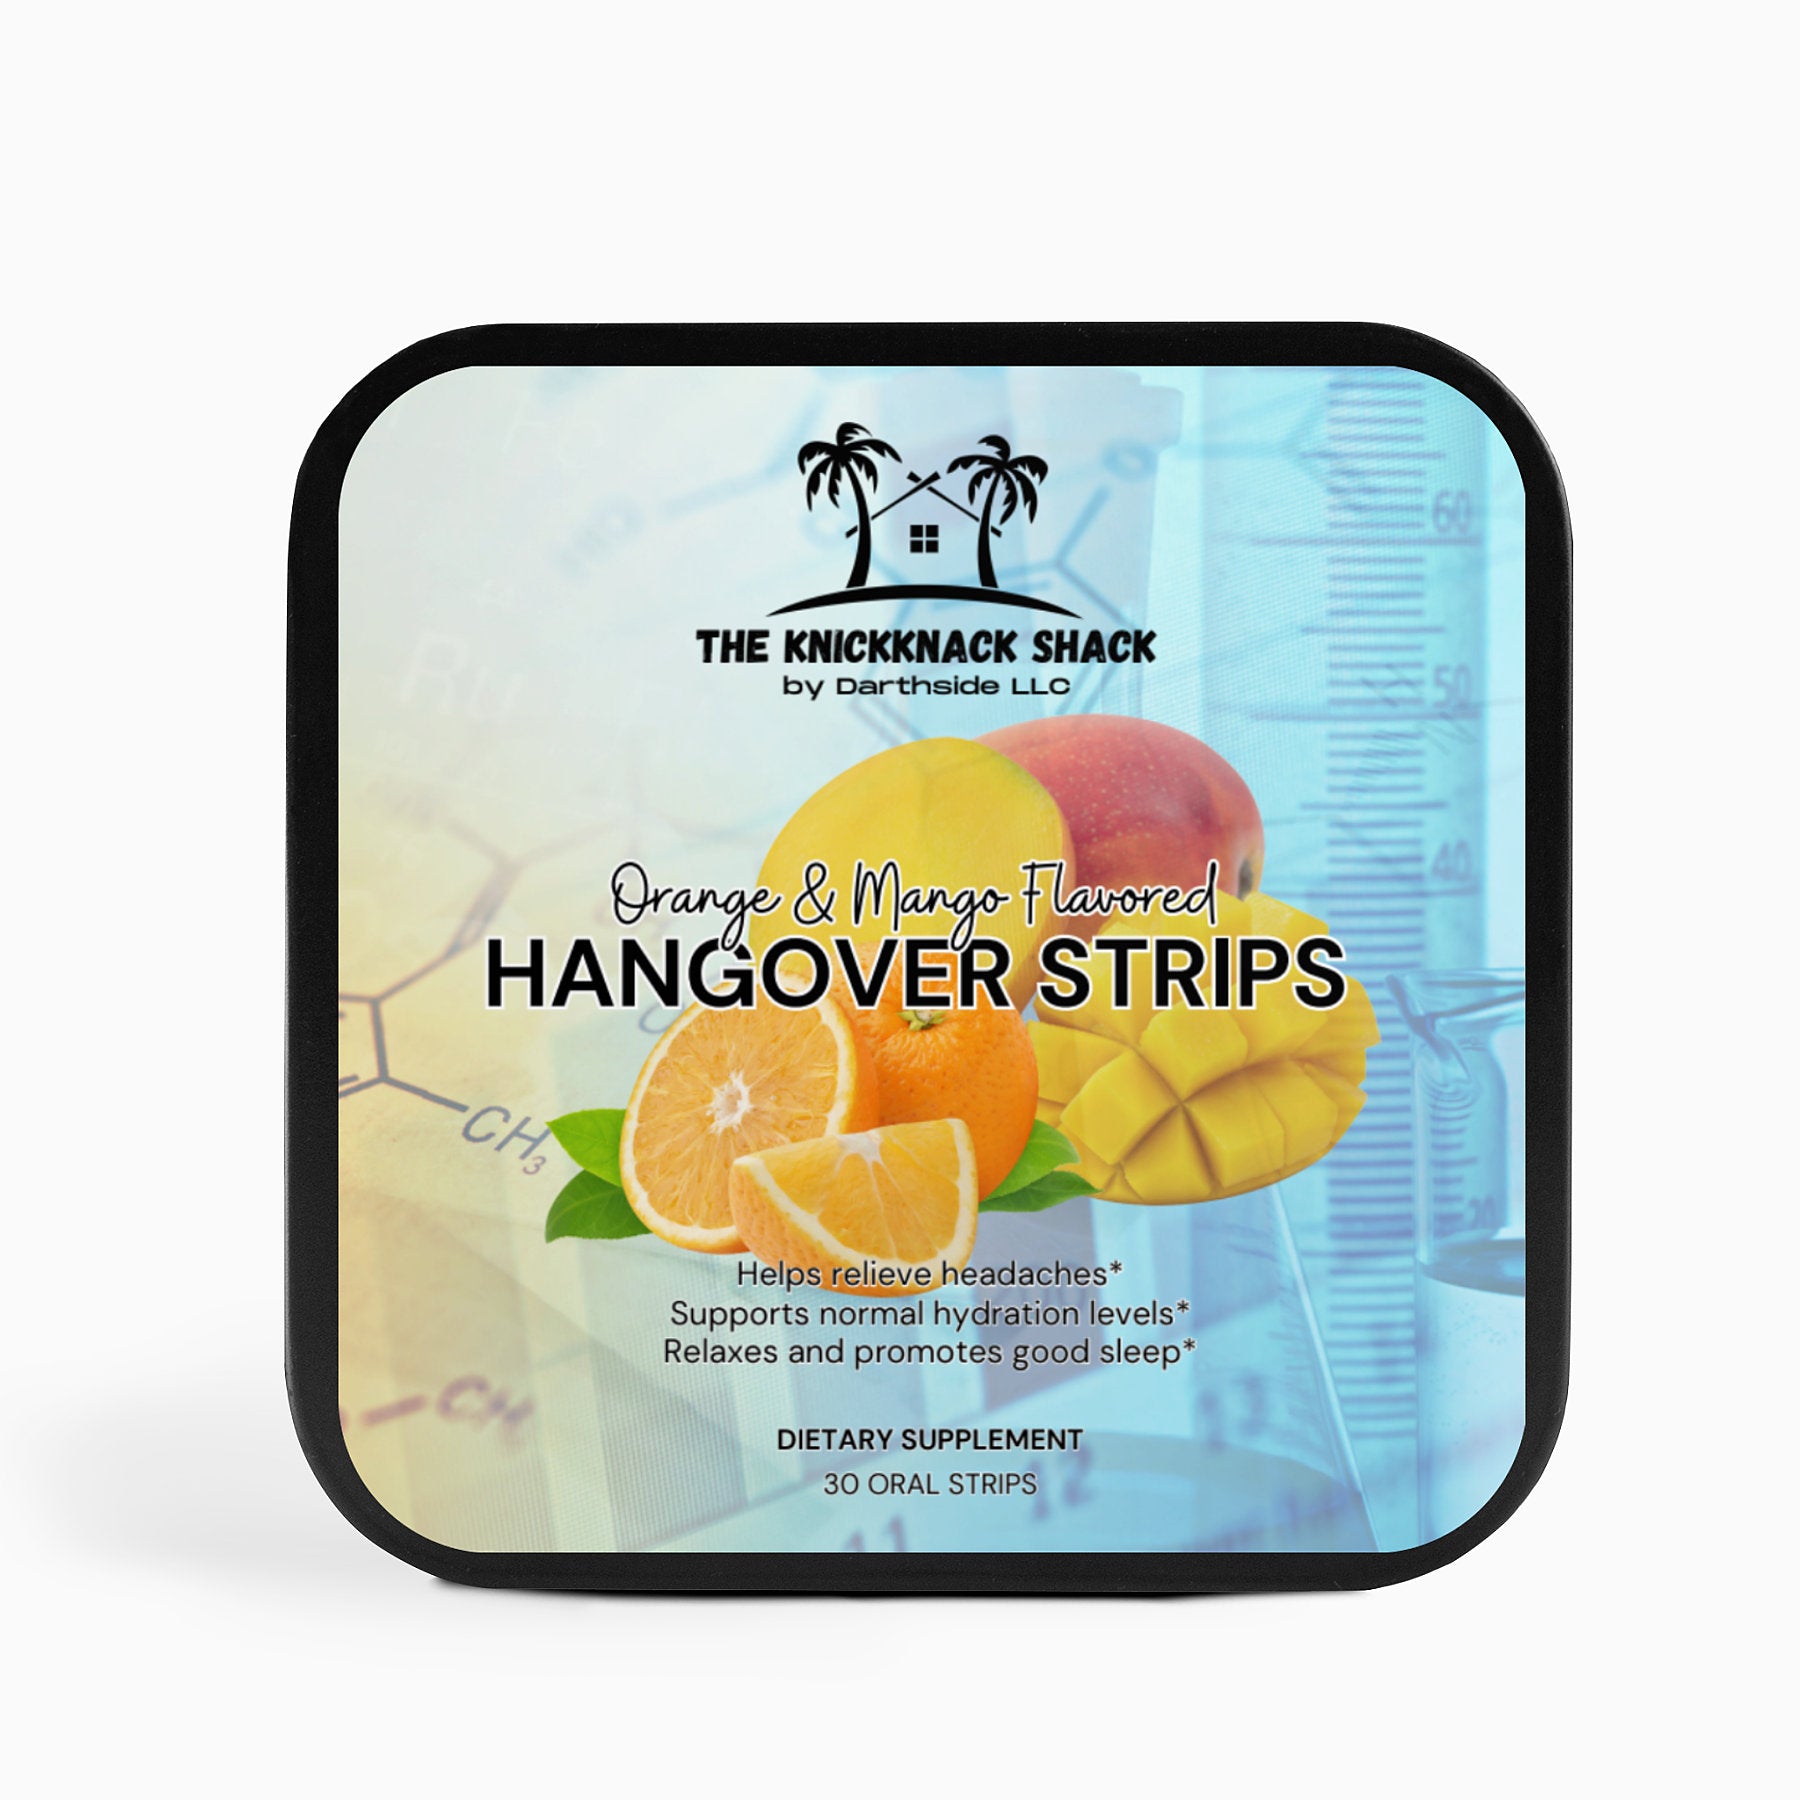 Orange & Mango Flavored Hangover Strips